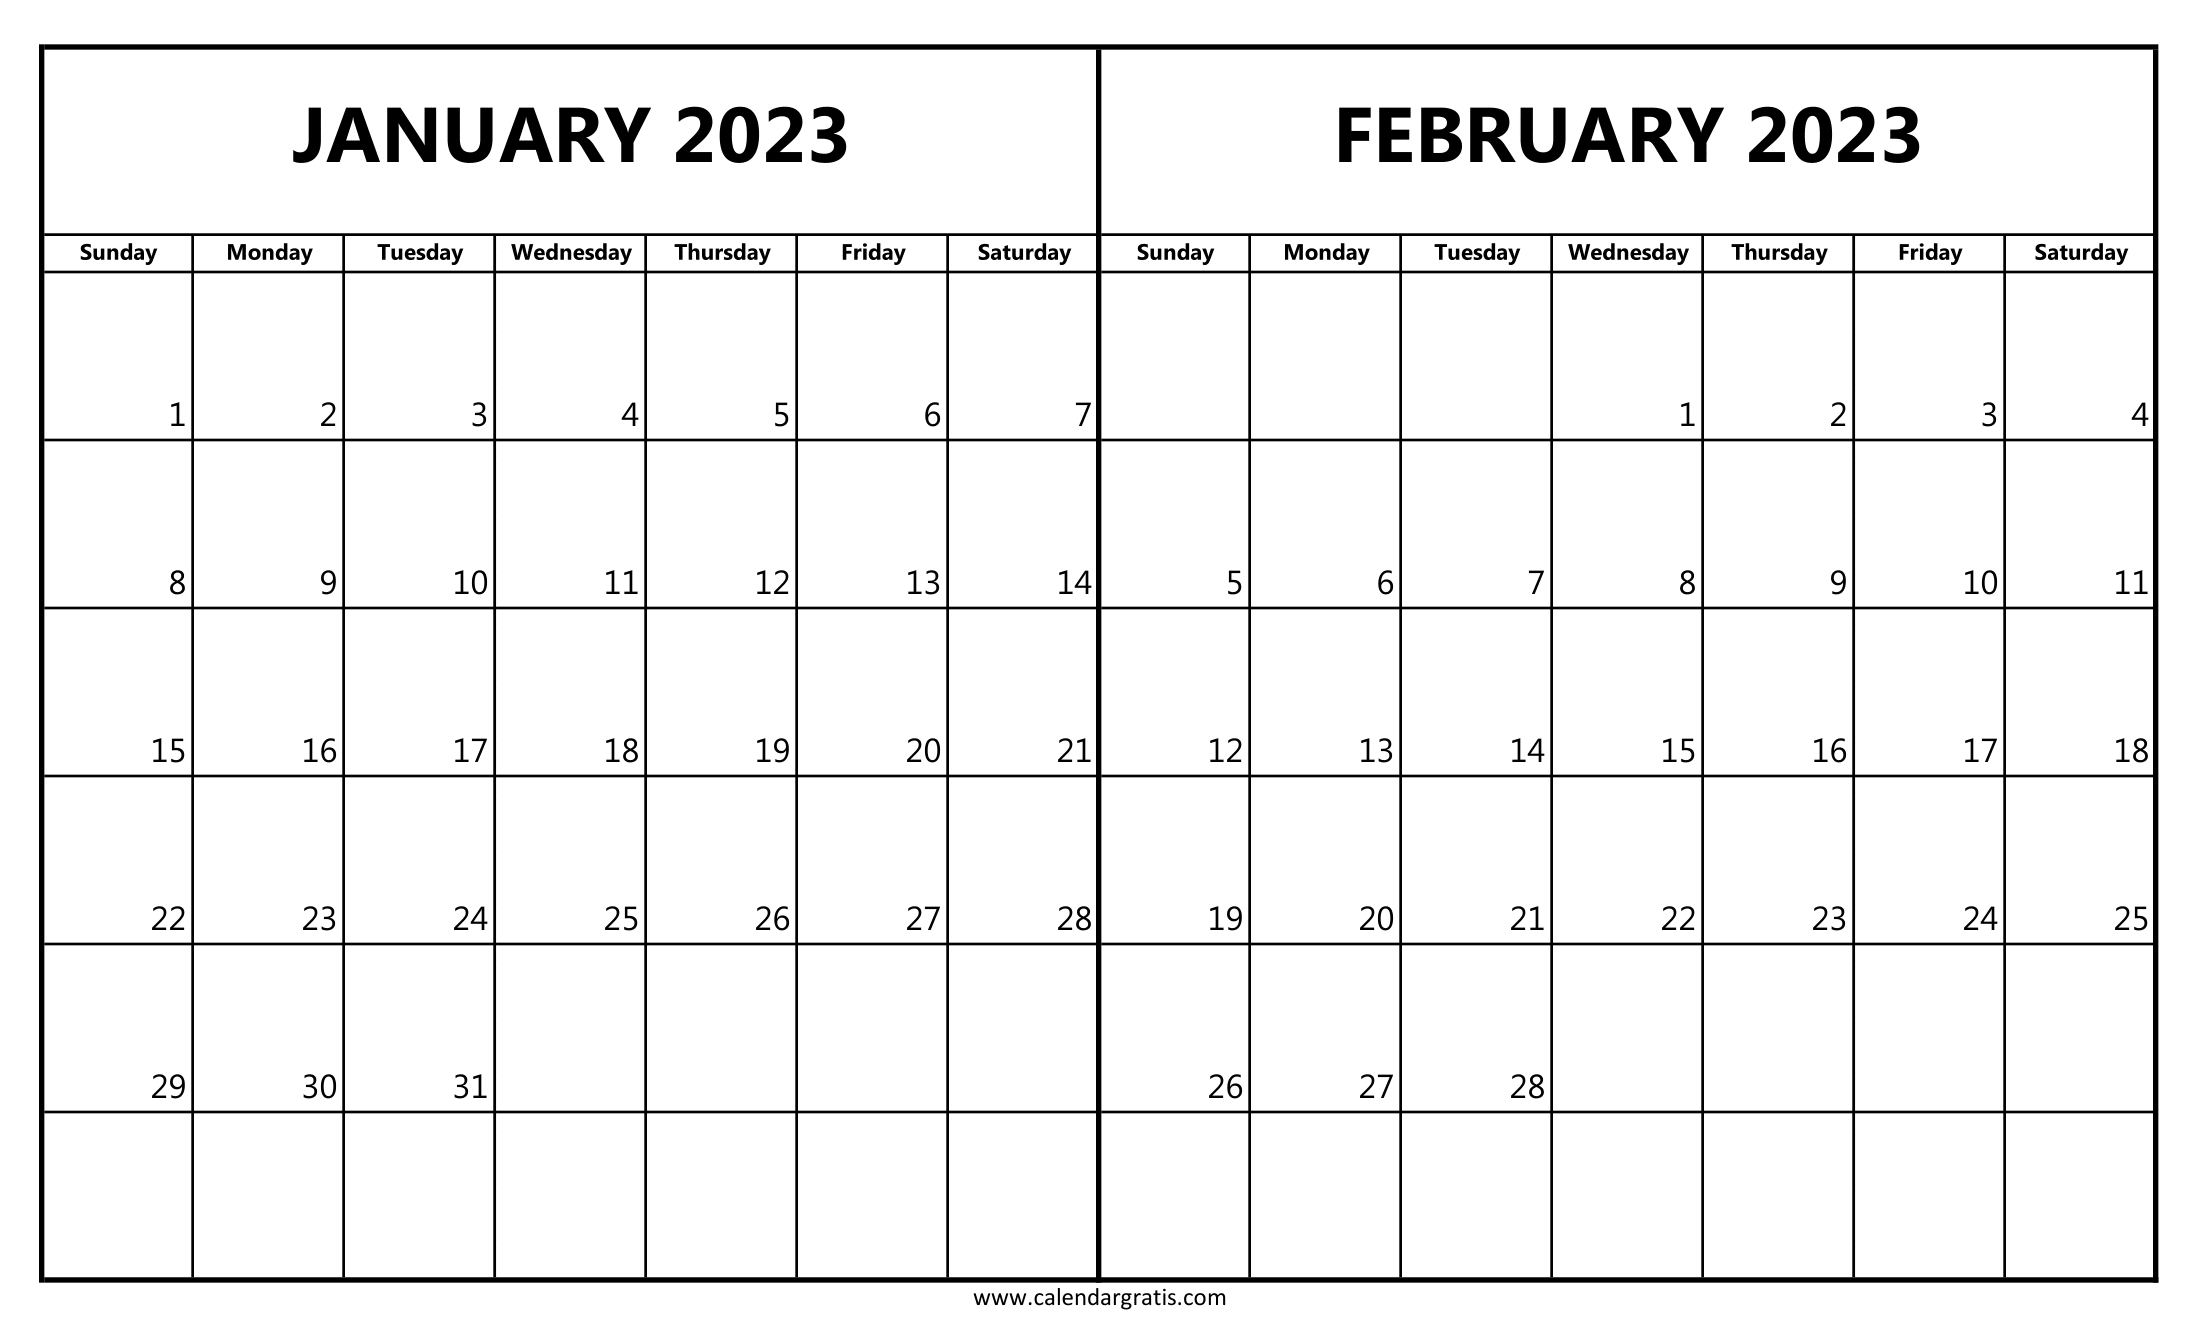 January February 2023 Calendar Printable Template in Horizontal Layout.